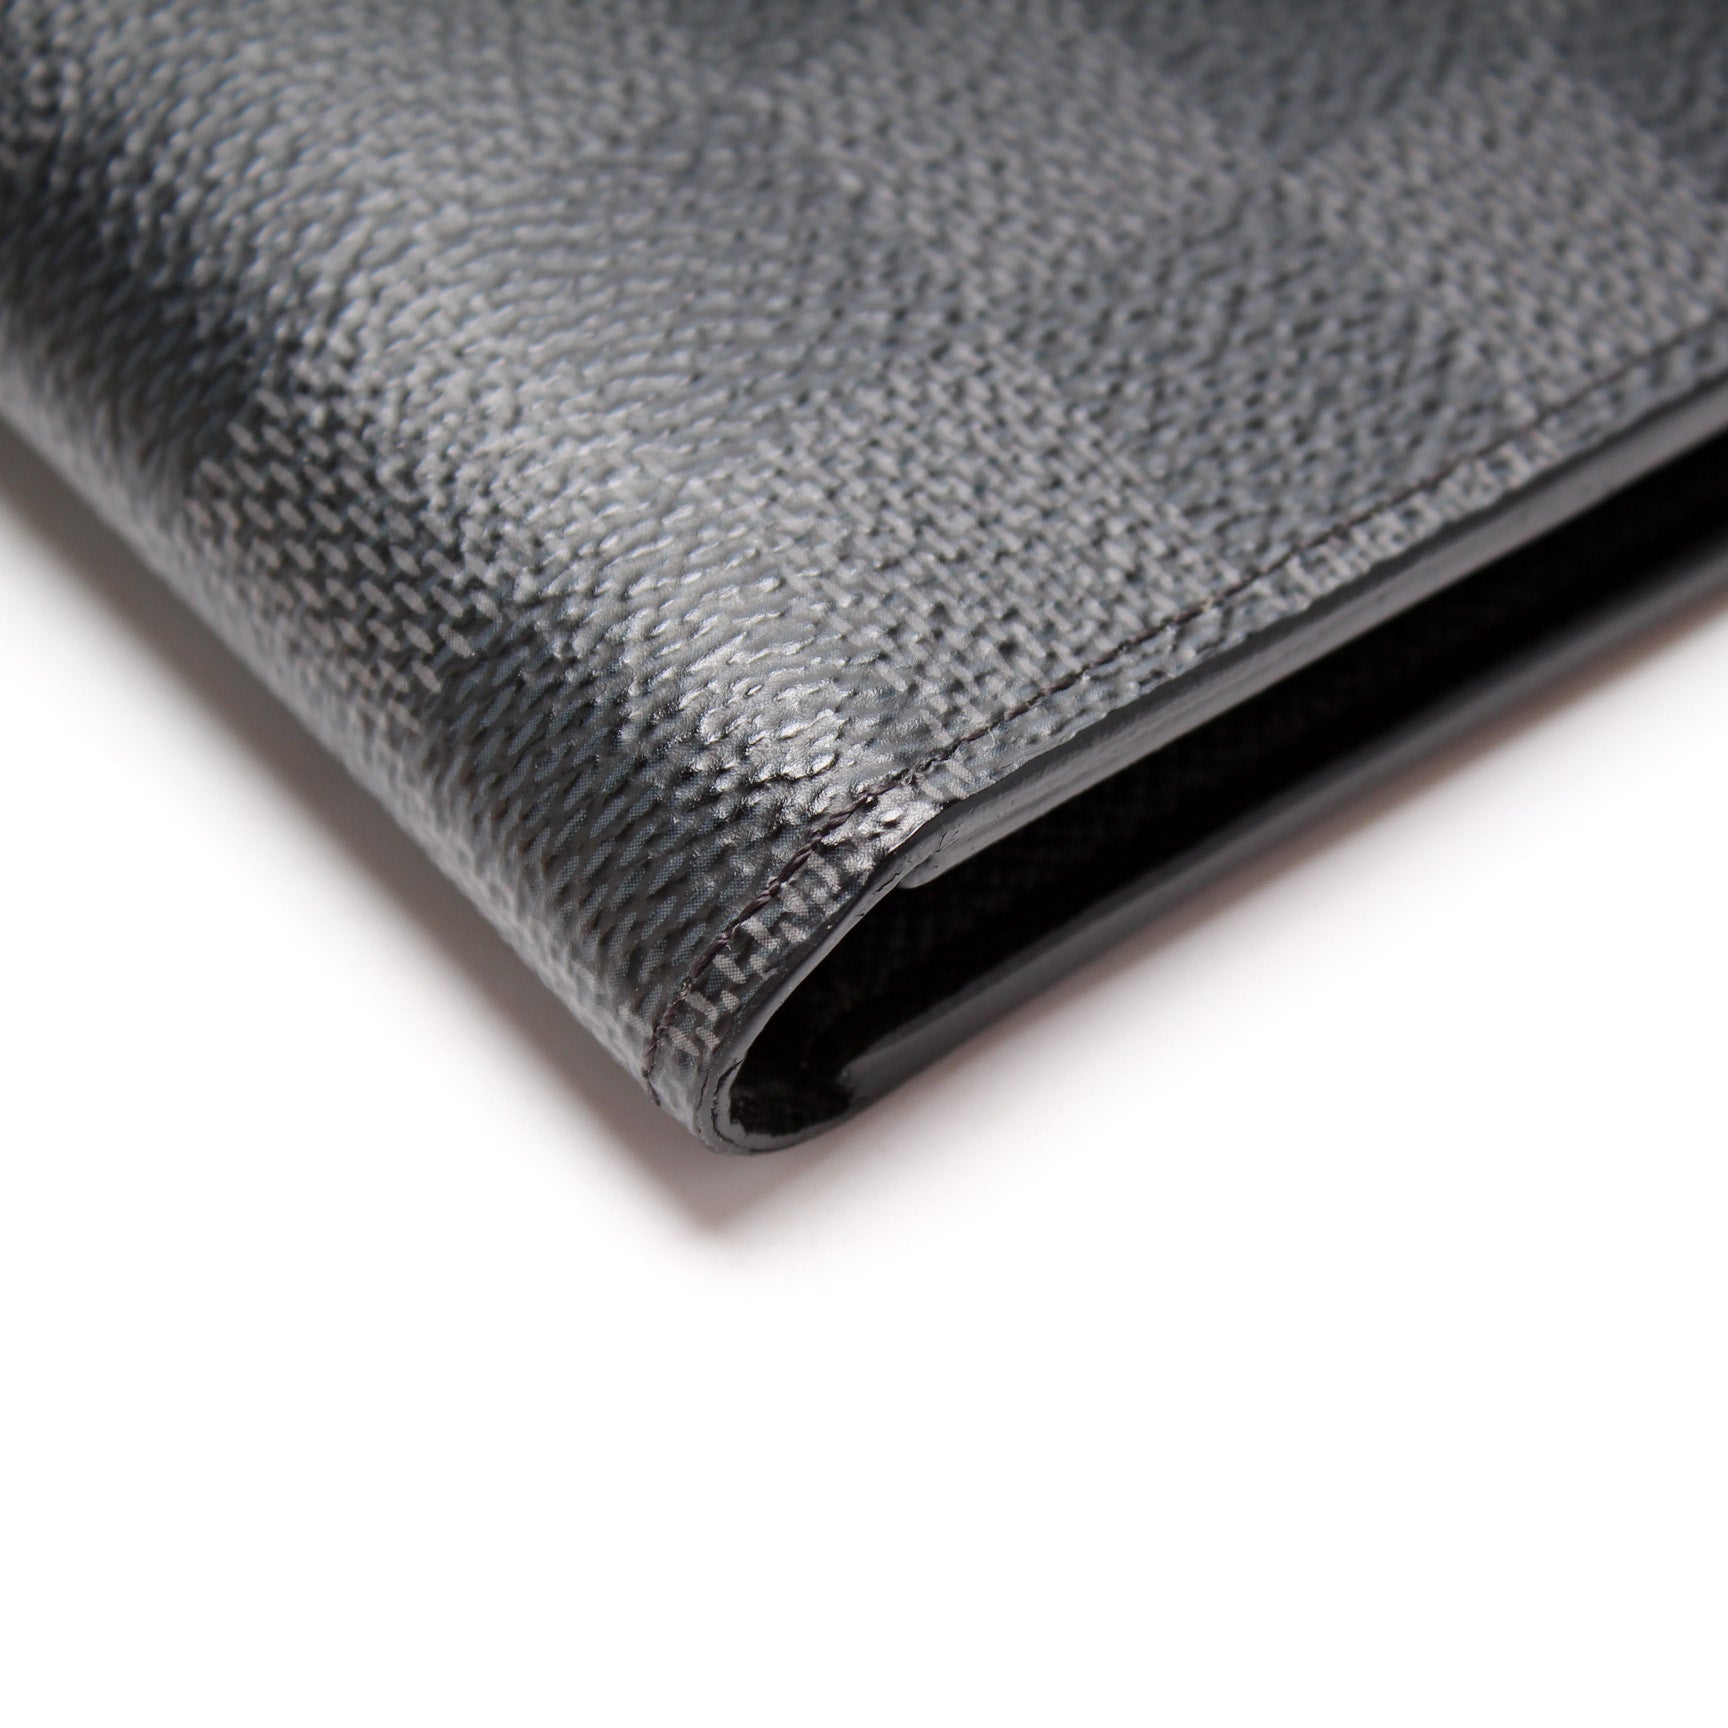 Louis Vuitton Slender ID Wallet Damier Graphite Black/Gray